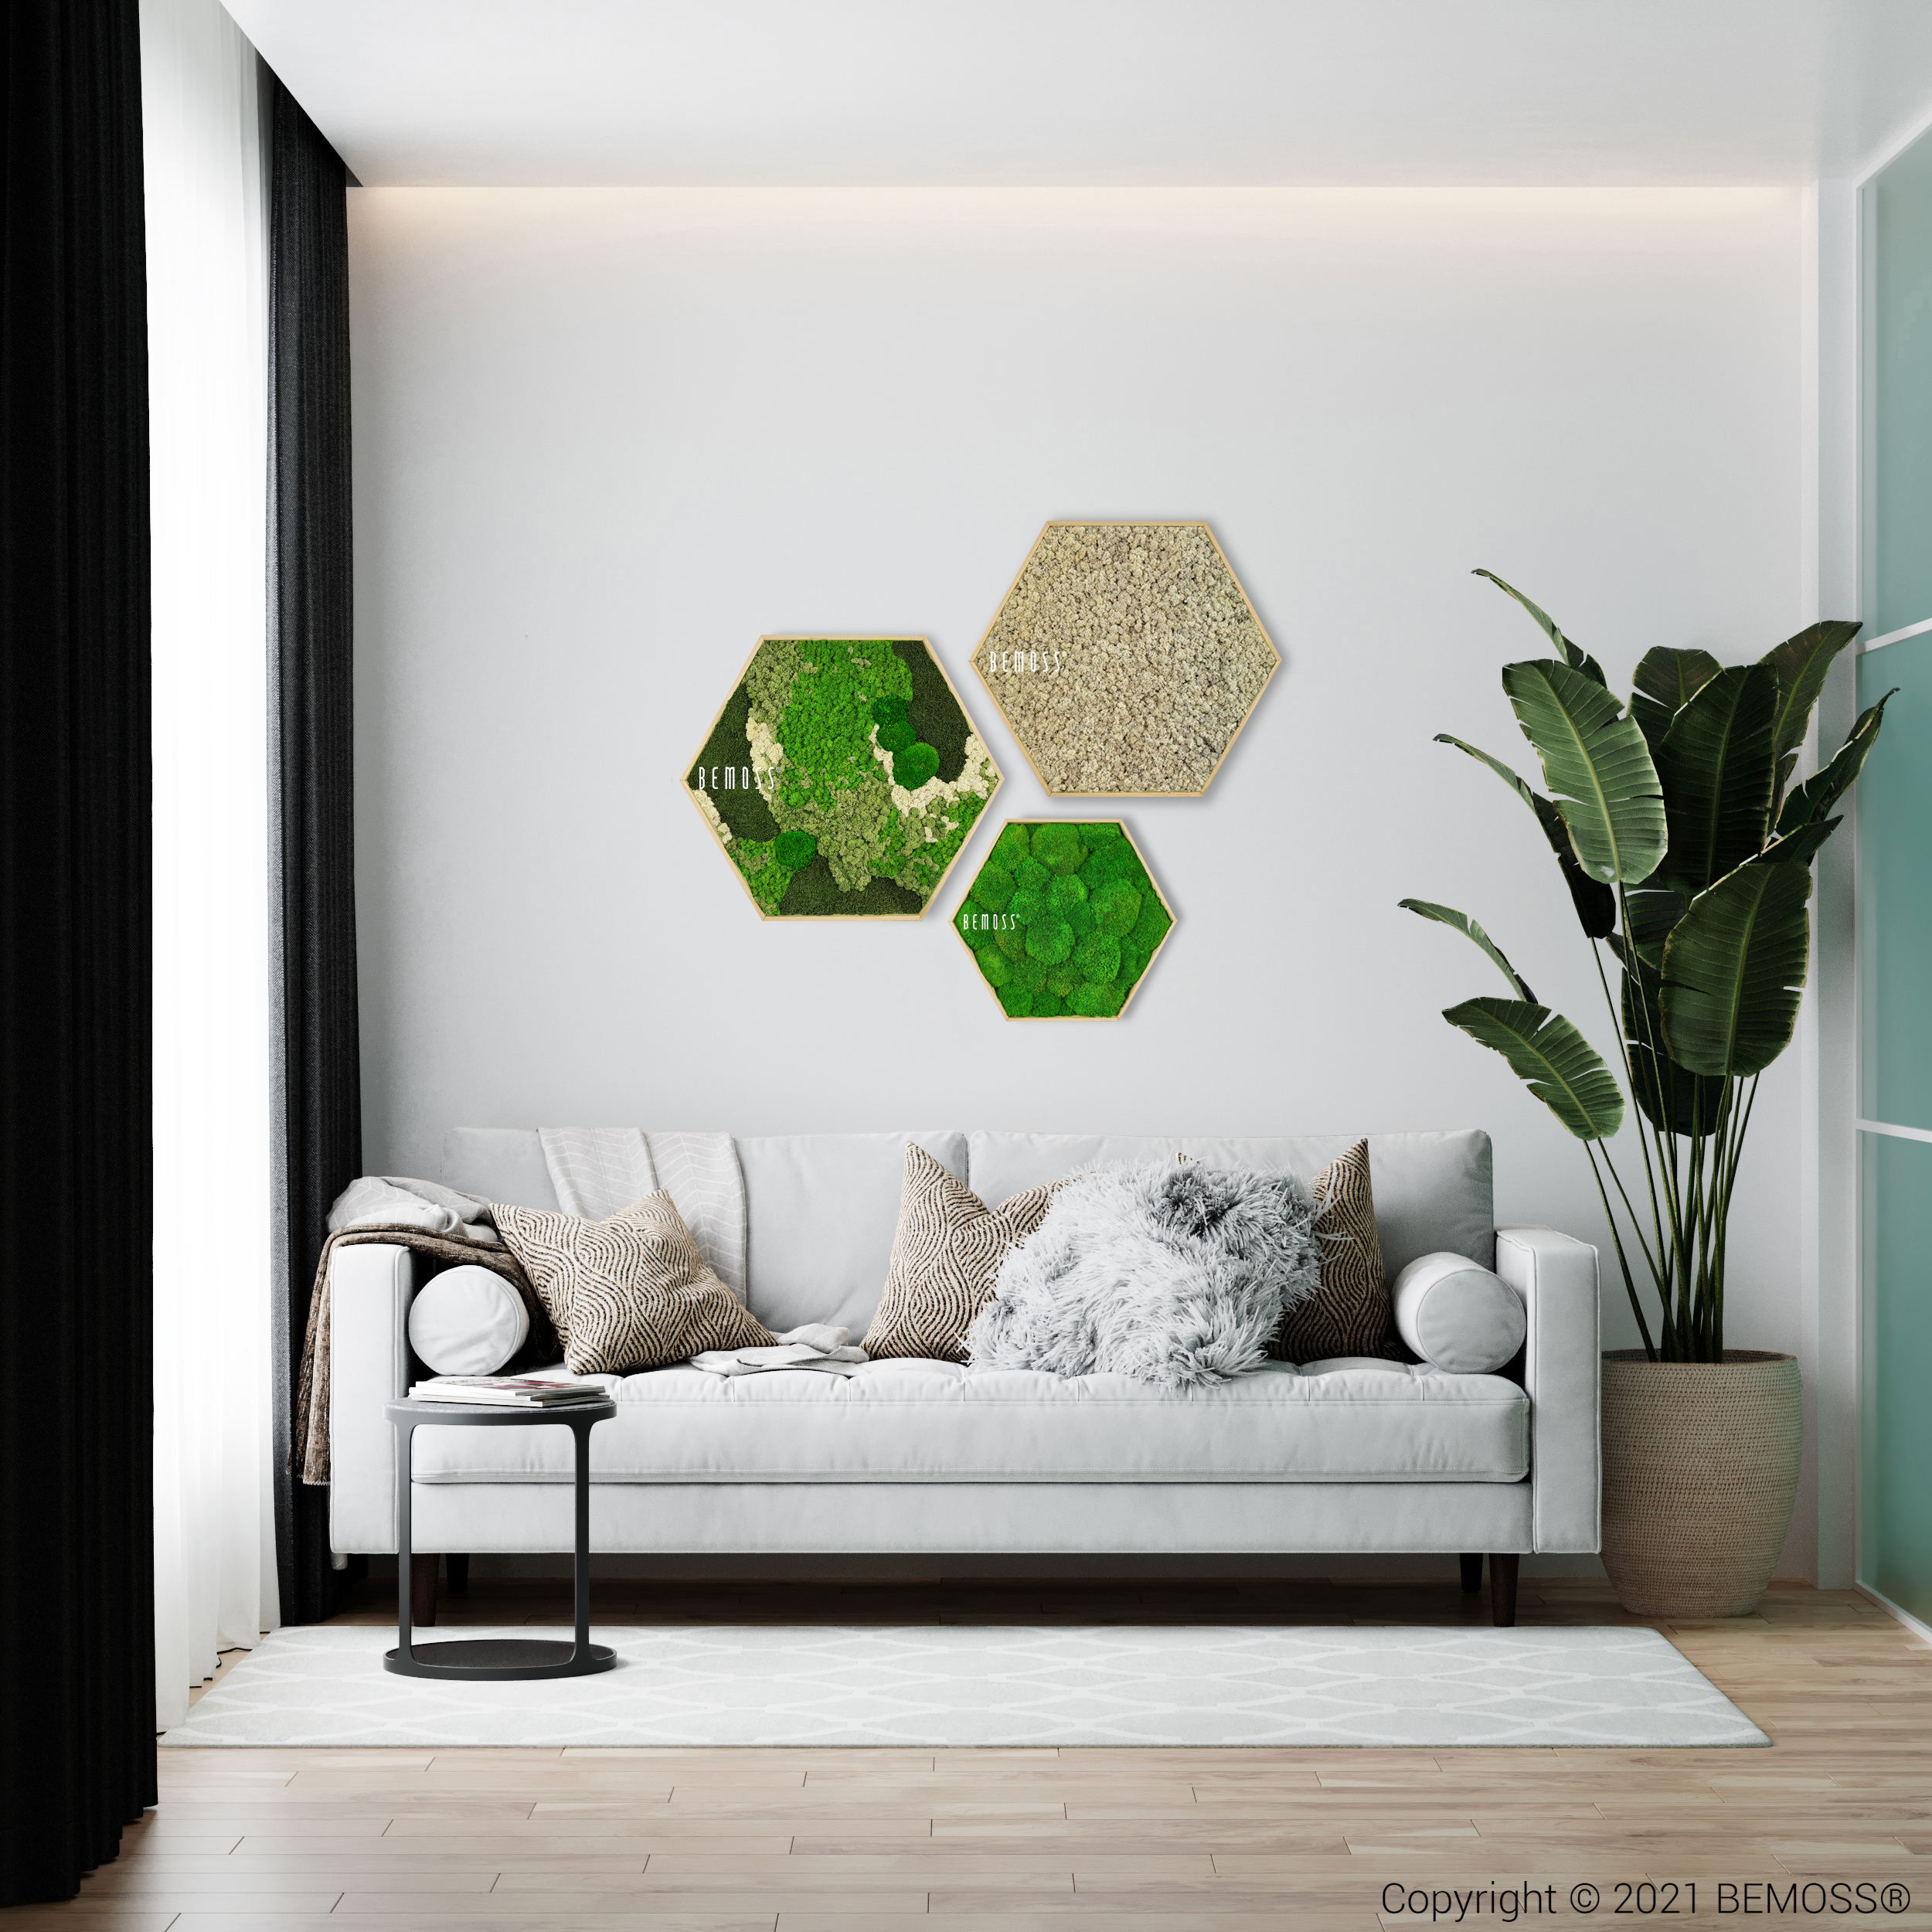 machový hexagon ortho green interier